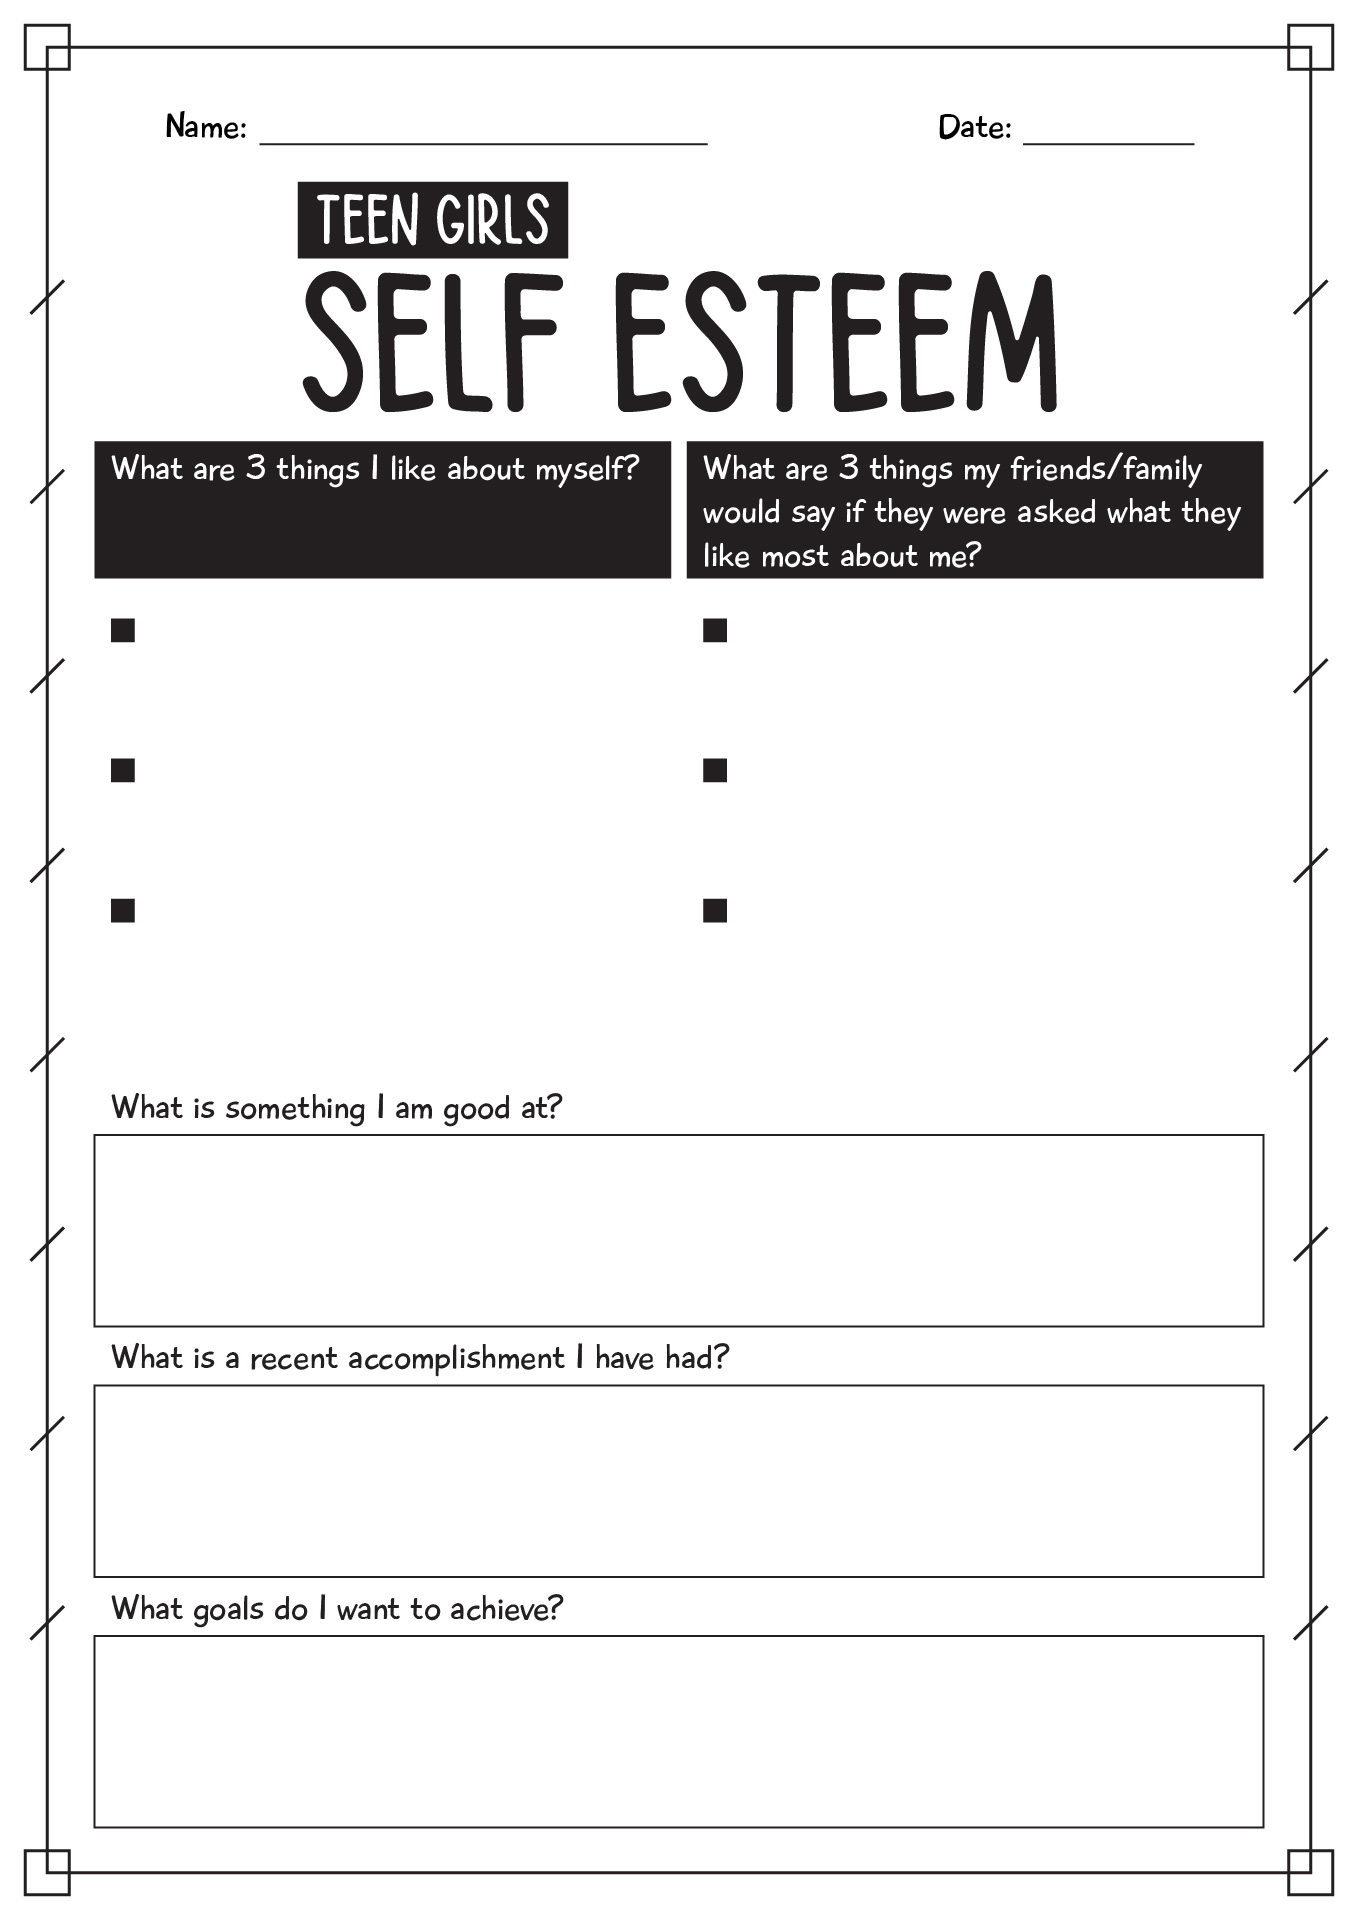 Teen Girls Self-Esteem Worksheet.pdf